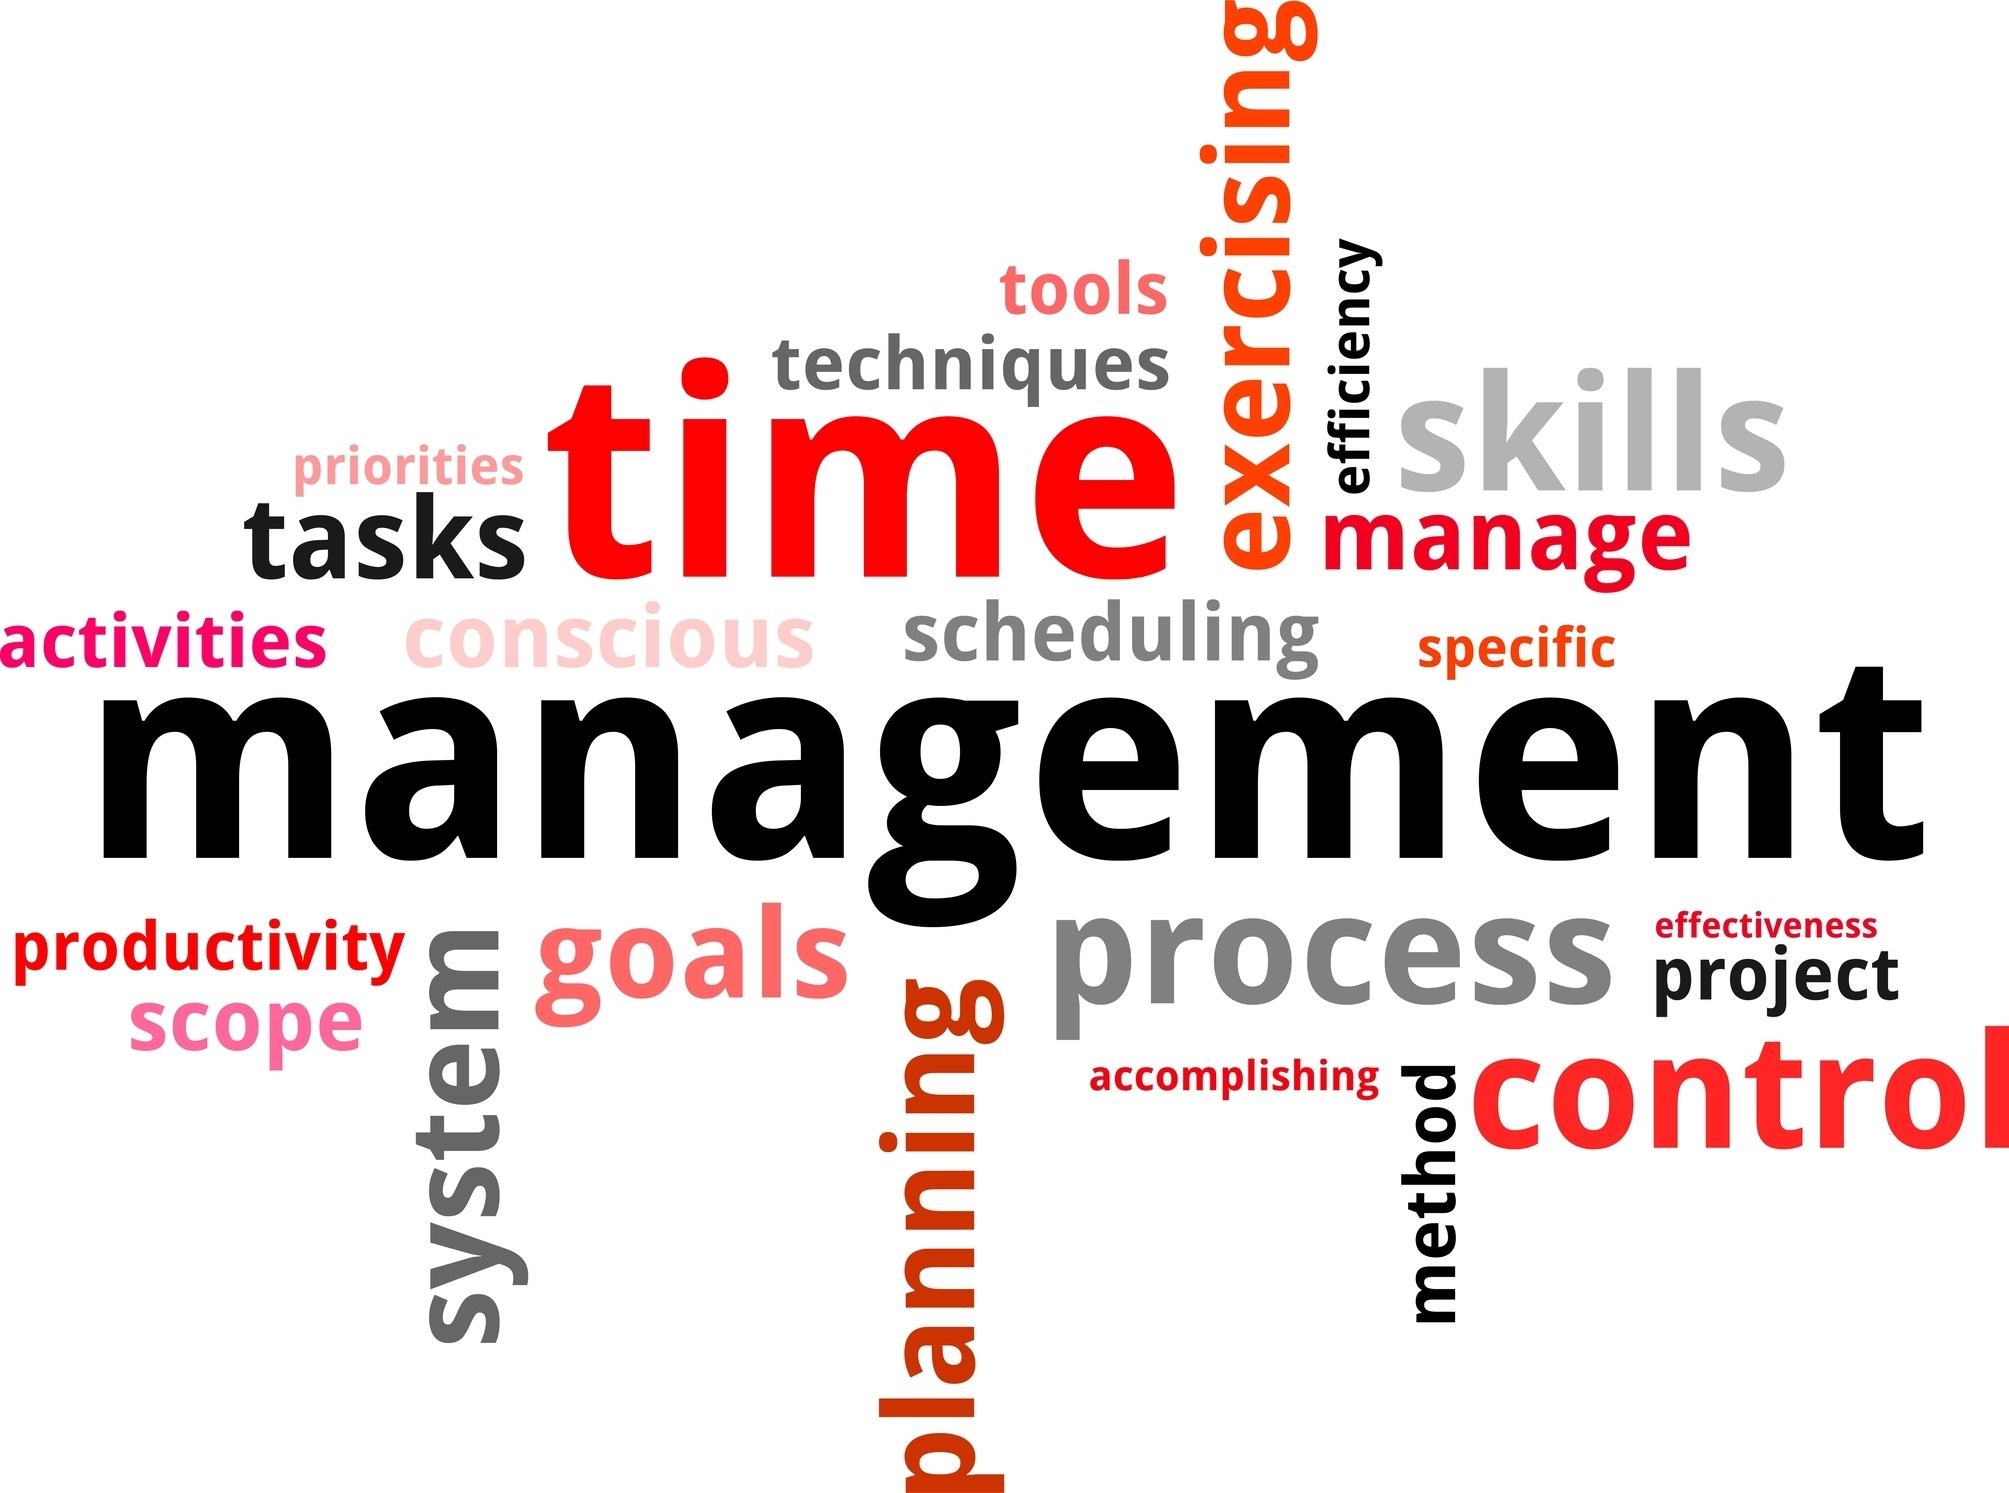 Time management training